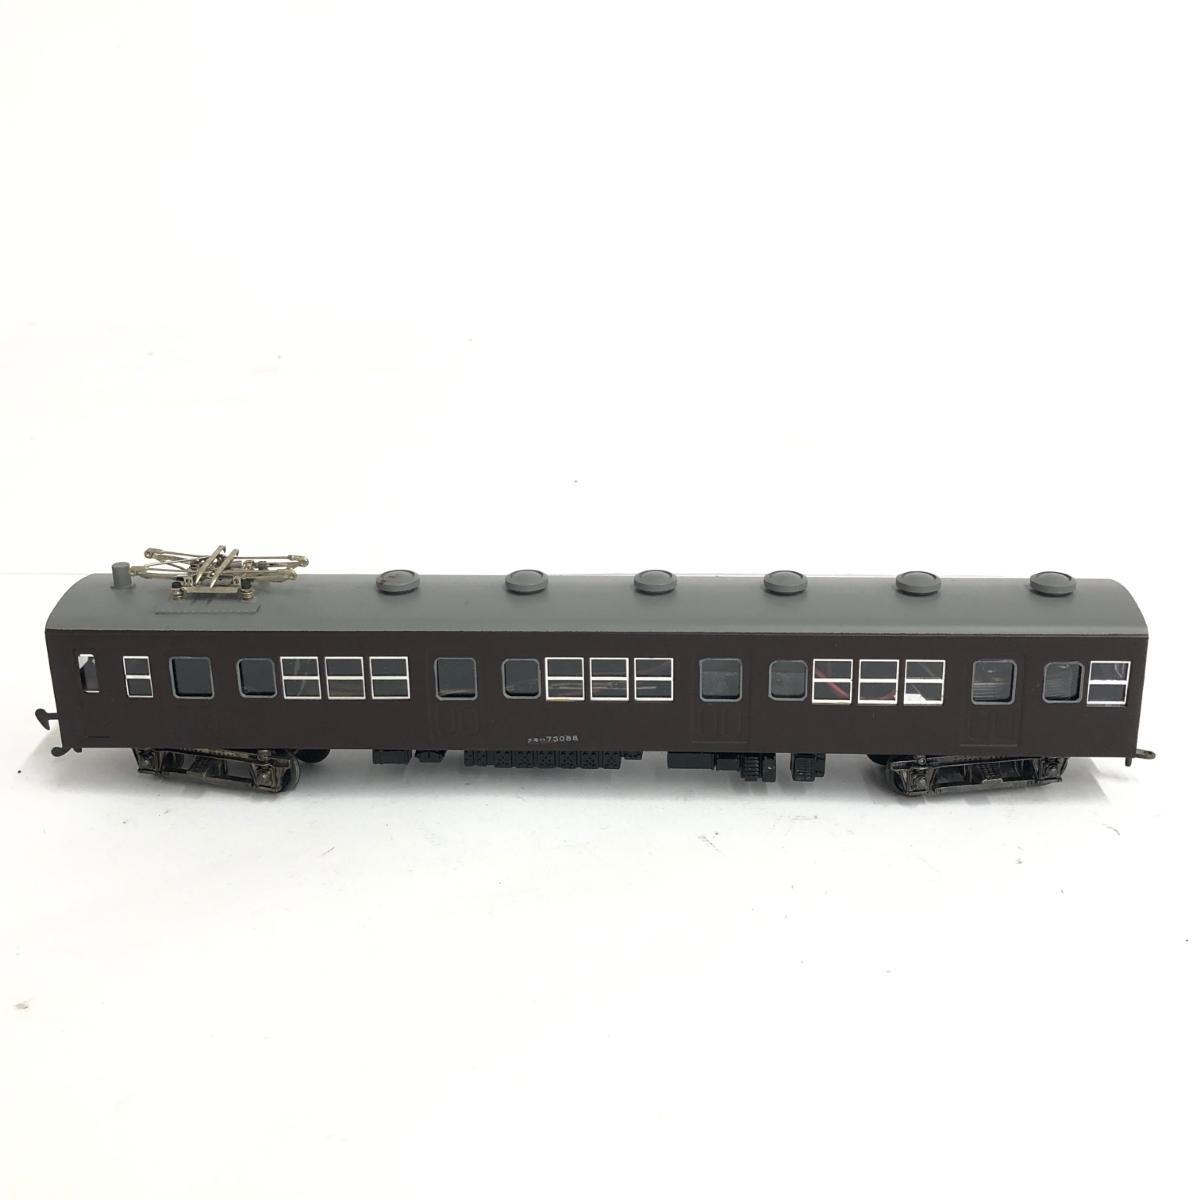  junk *KTM KATSUMIka loading HO gauge railroad model passenger car motor attaching *kmo is 73 Brown collection hobby train 